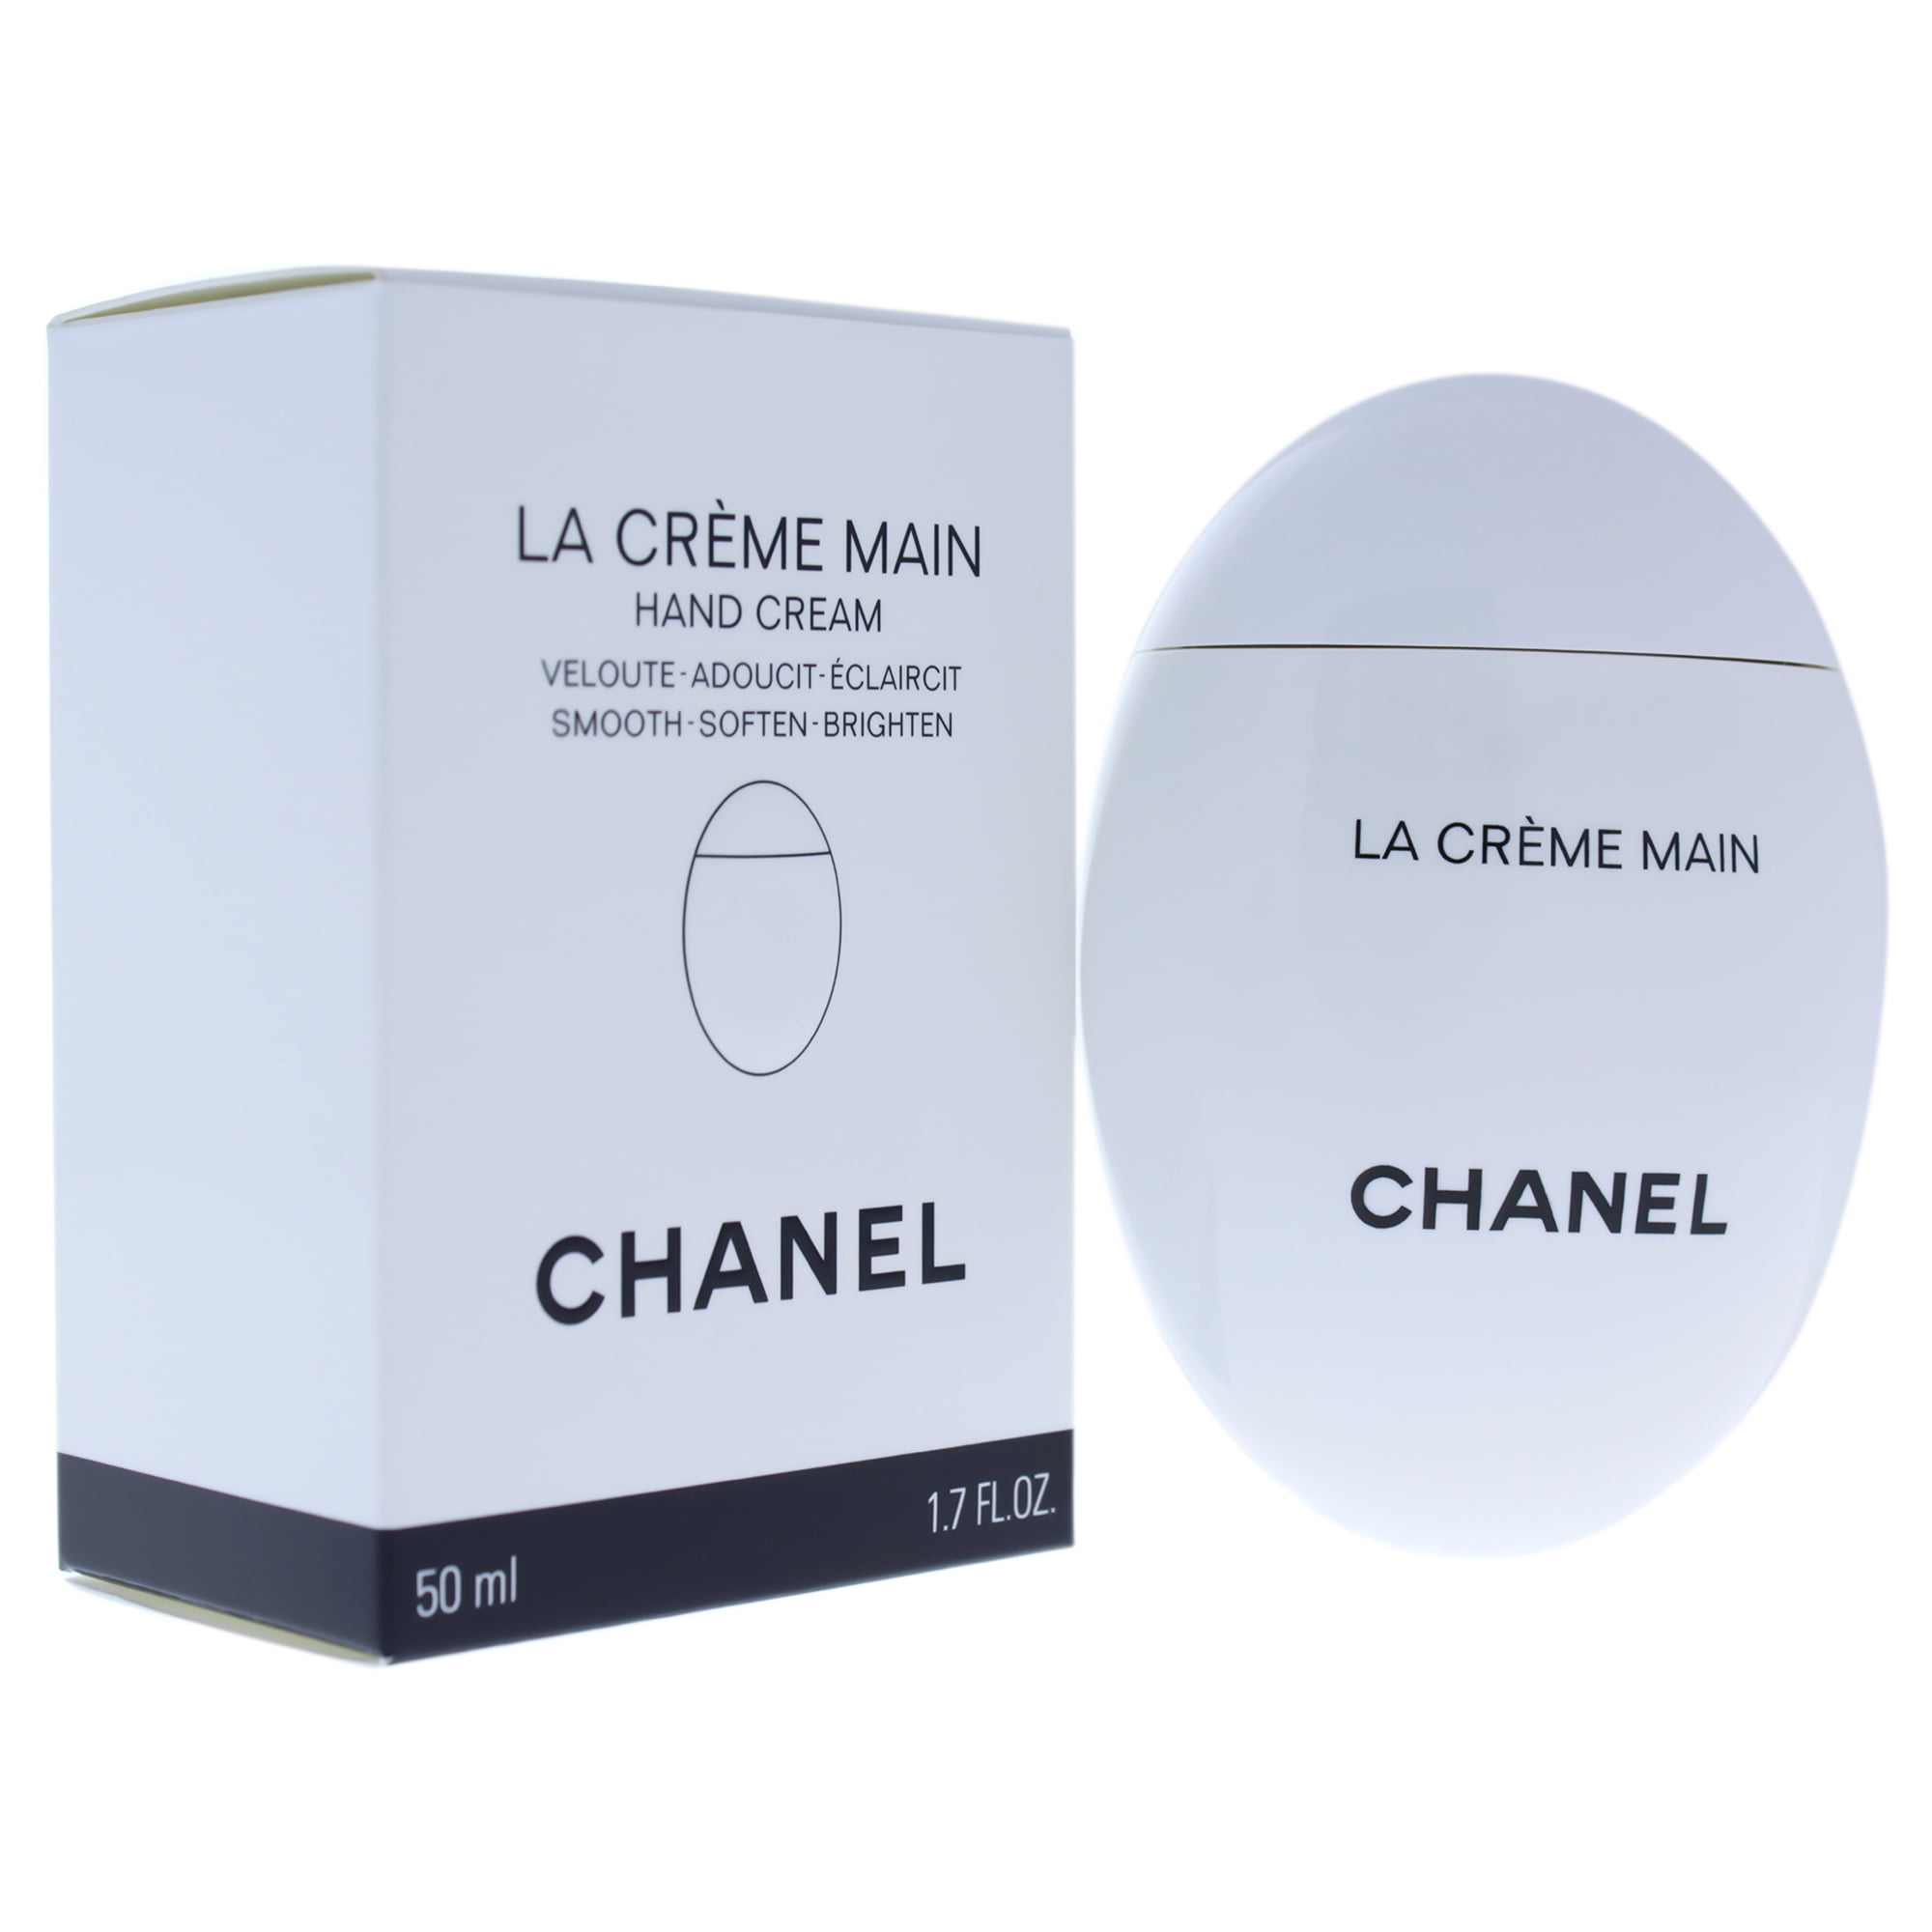 CHANEL - Hand Cream Smooth - Soften - Brighten by Chanel for Unisex - 1